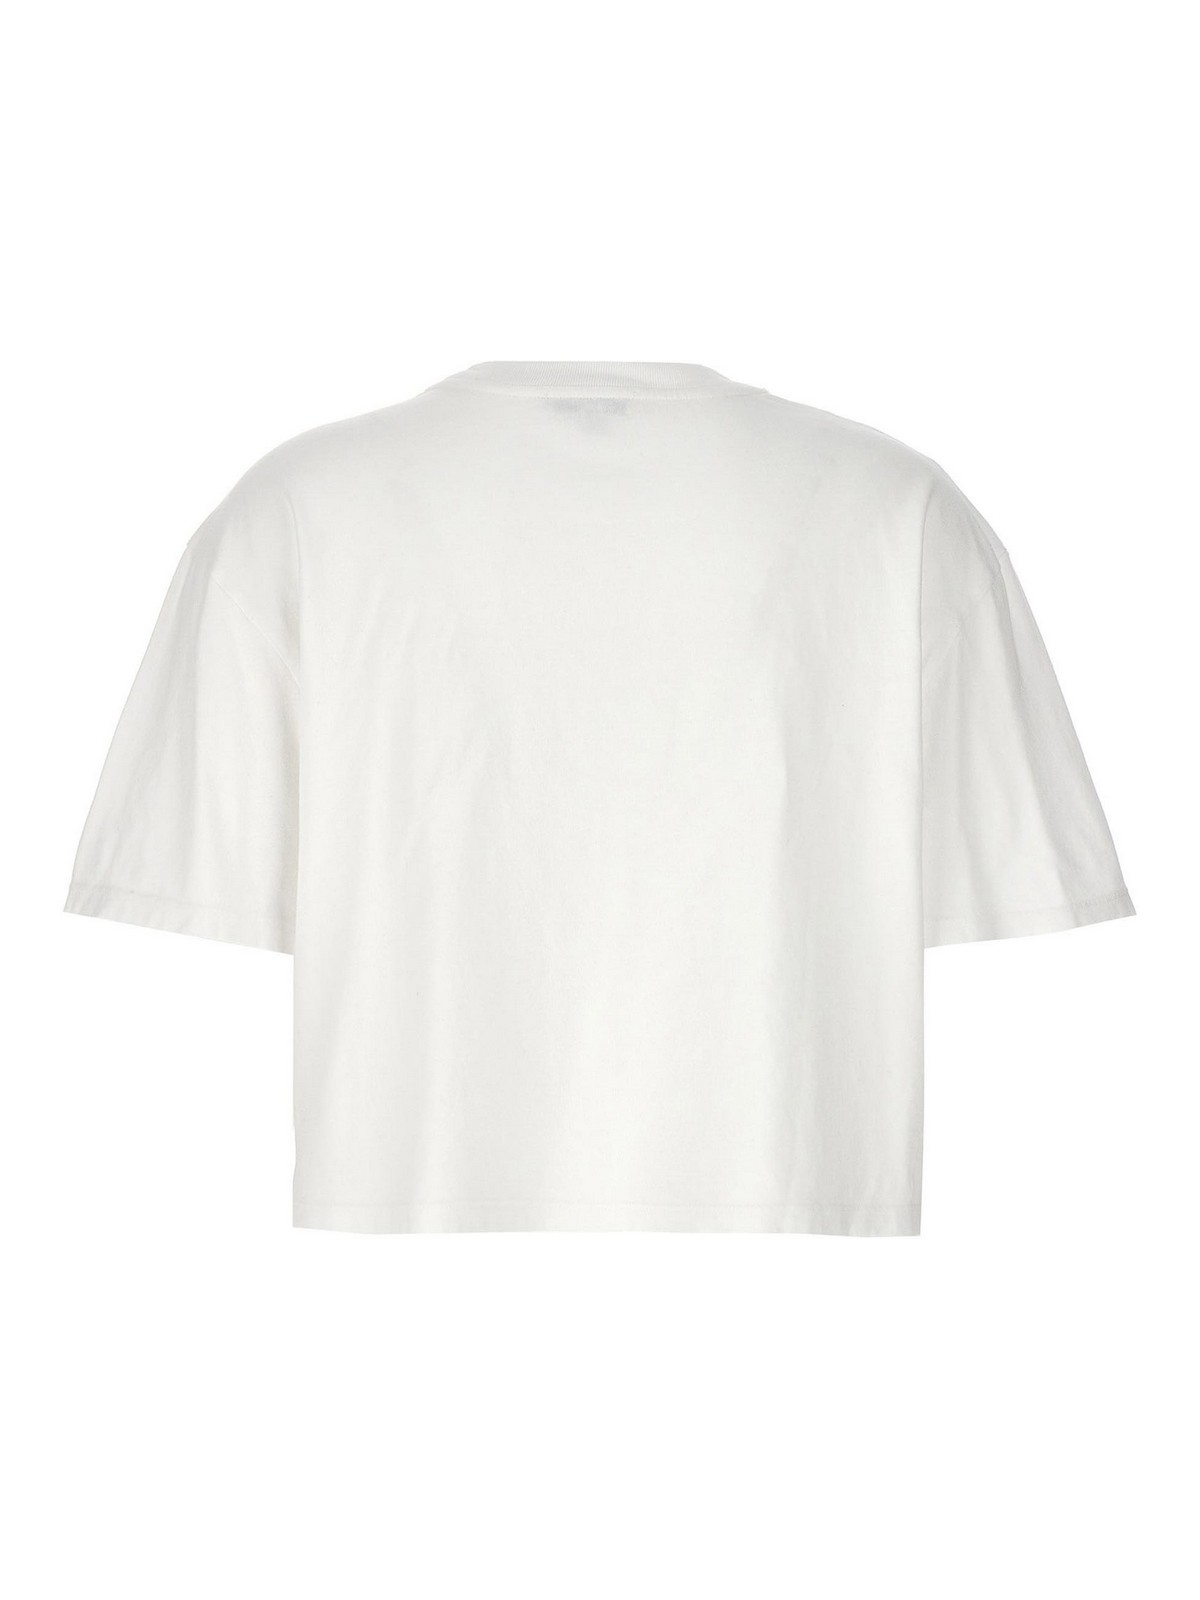 Shop Agolde Camiseta - Anya In White